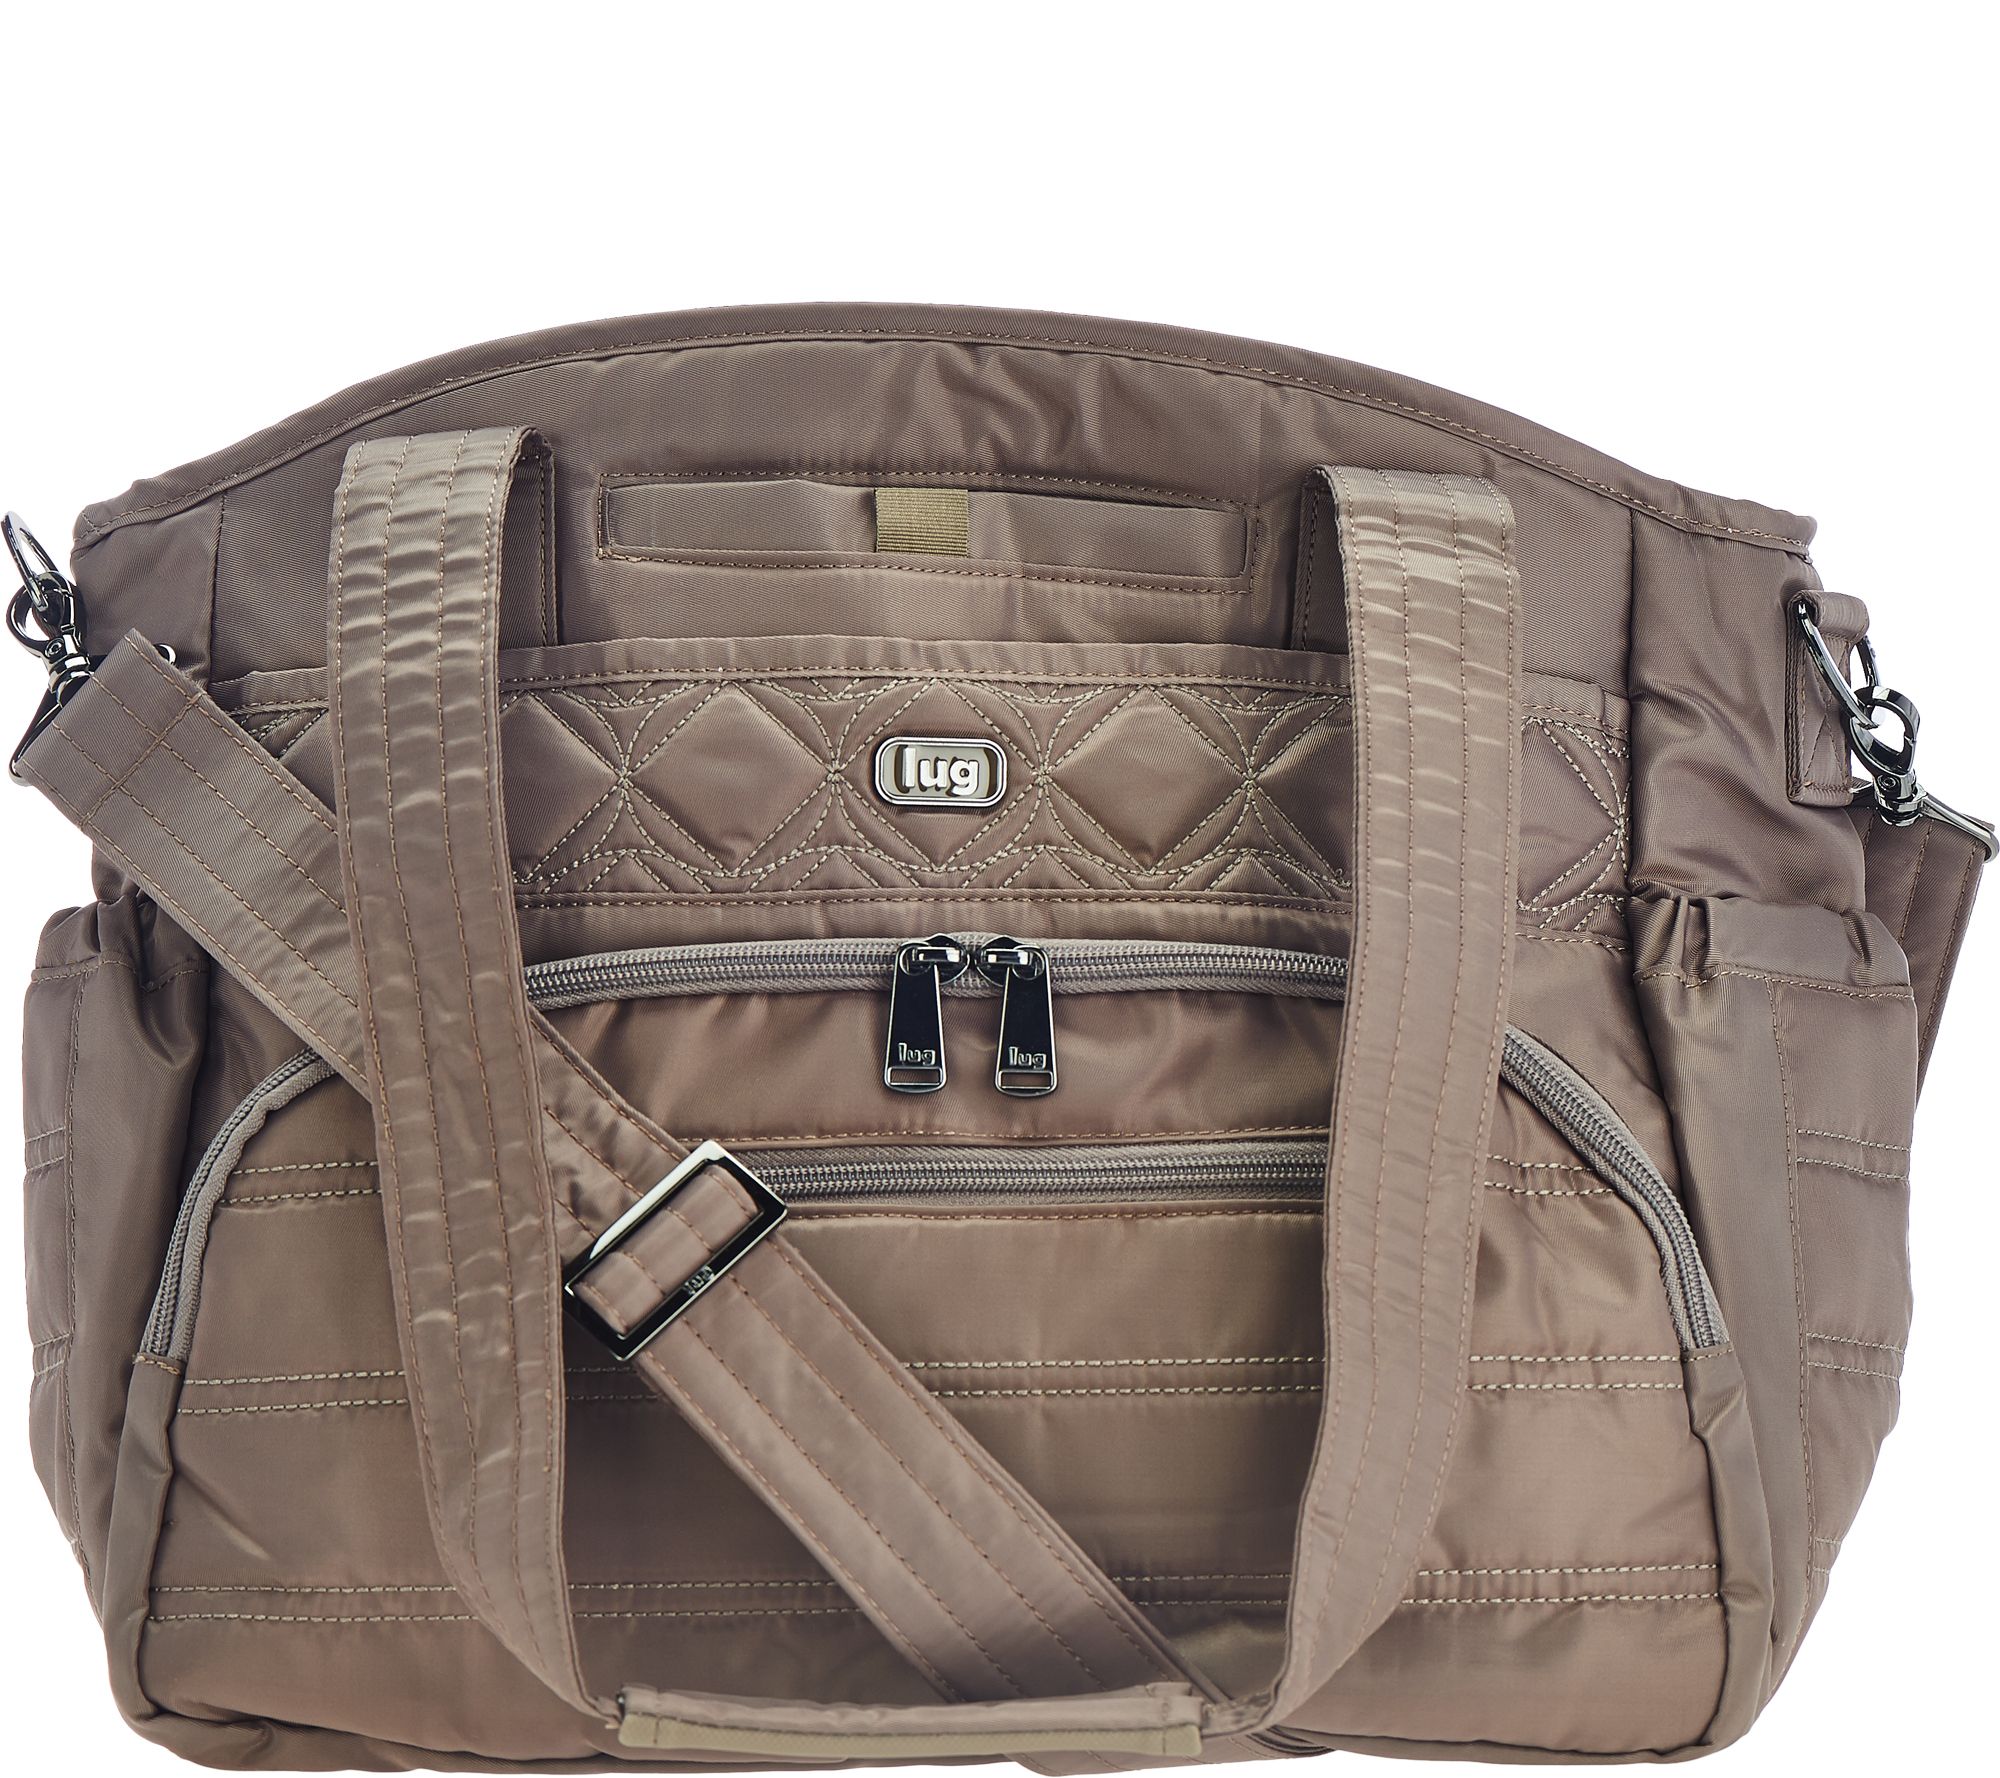 Lug Travel Bags for Women — Handbags & Luggage — www.waldenwongart.com